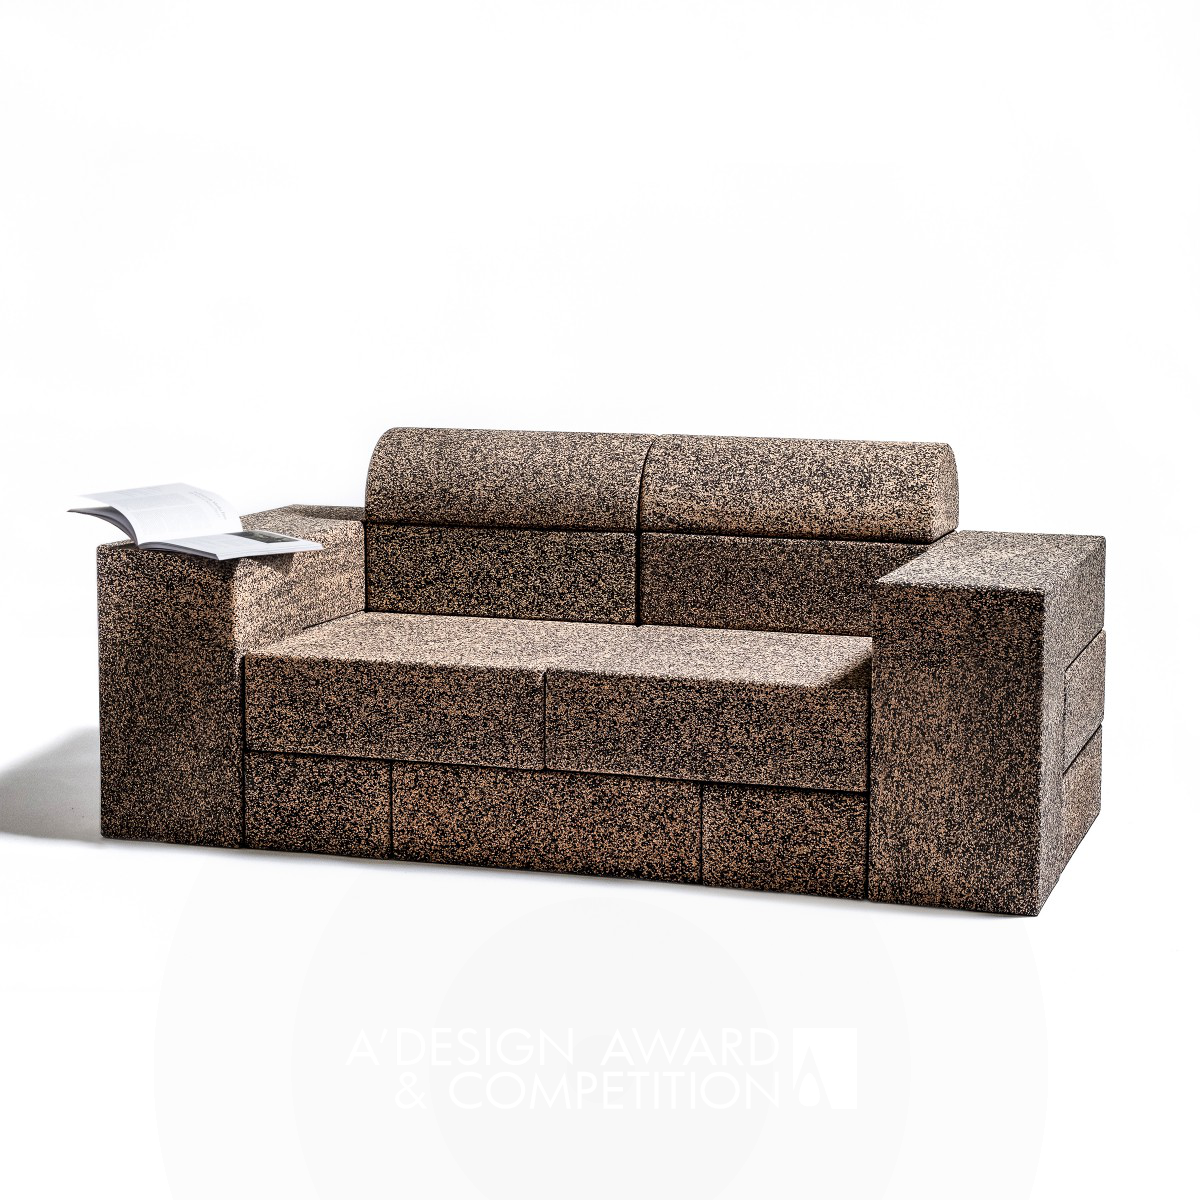 Miguel Arruda Introduces the Cork Block Sofa